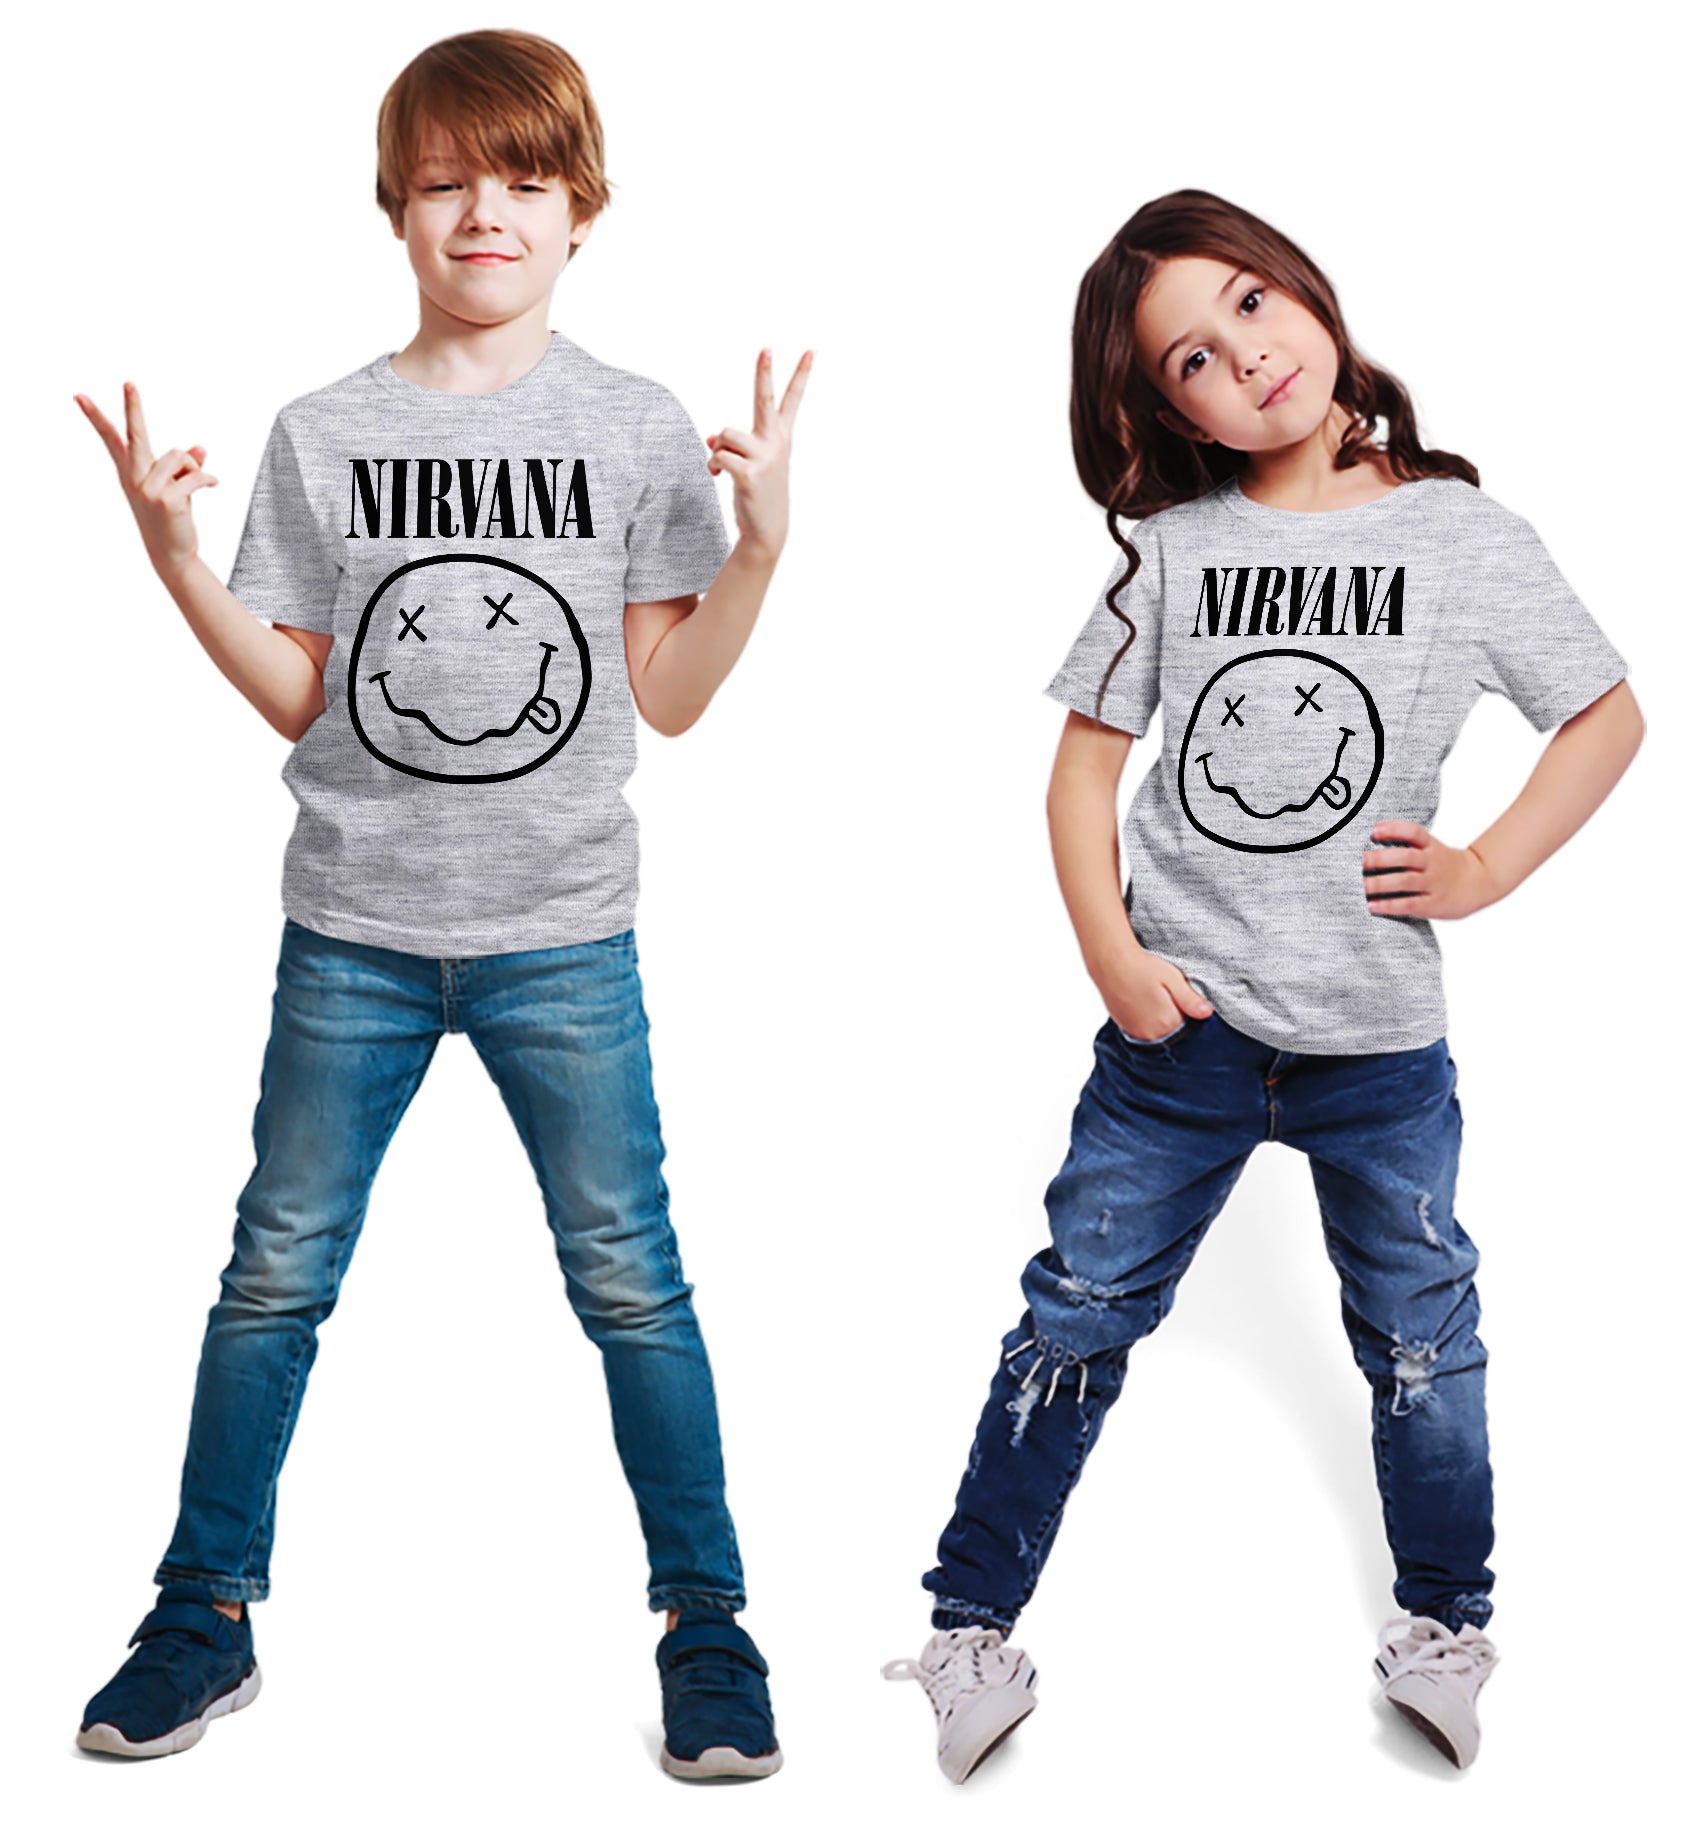 Nirvana Kids